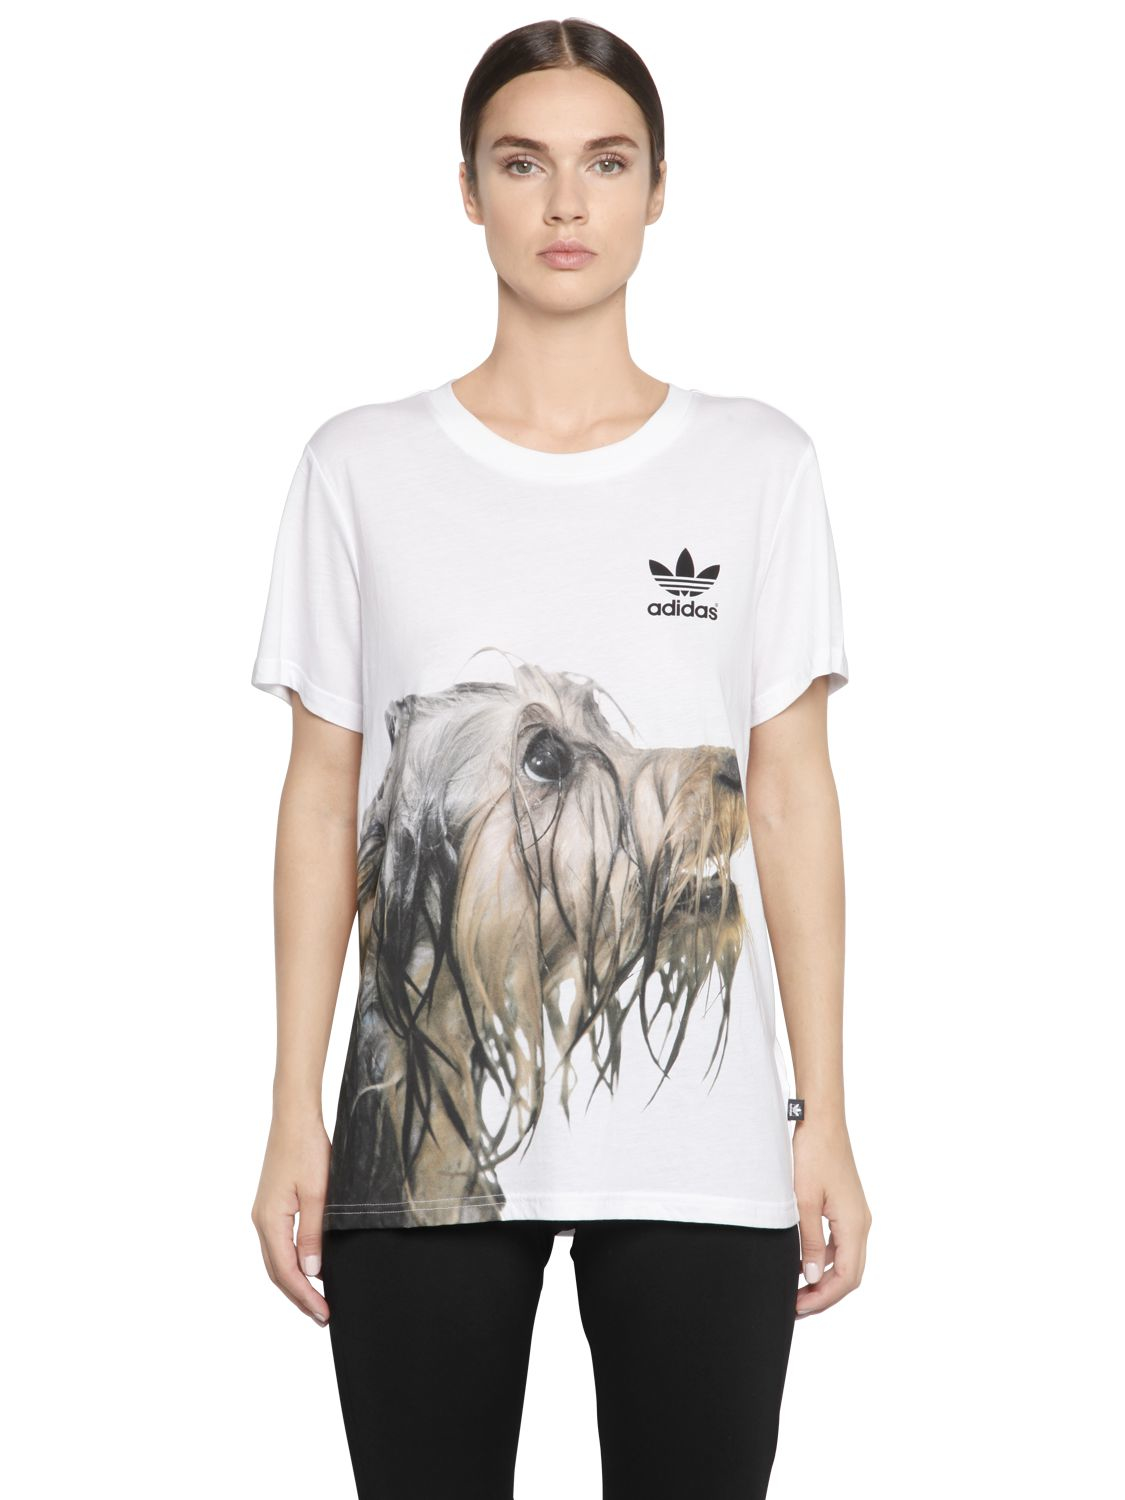 adidas Originals Wet Dog Printed Cotton Jersey T-shirt in White - Lyst1125 x 1500